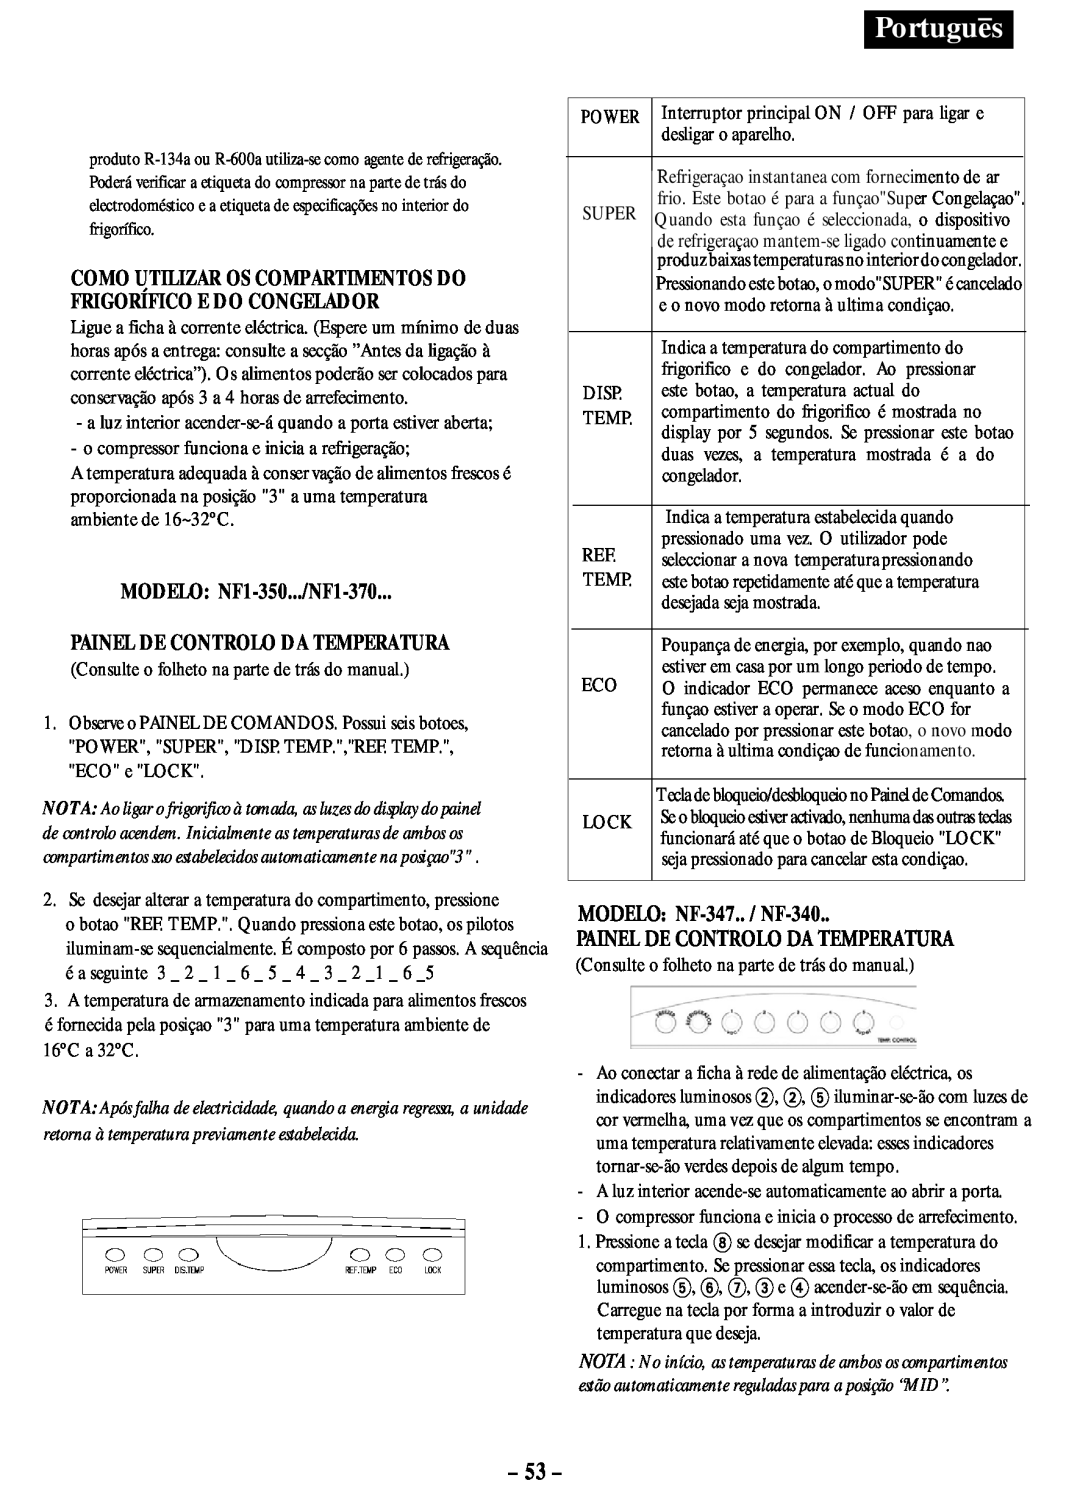 Opteka manual 53, Portugues, MODELO: NF1-350.../NF1-370, Painel De Controlo Da Temperatura, MODELO: NF-347.. / NF-340 